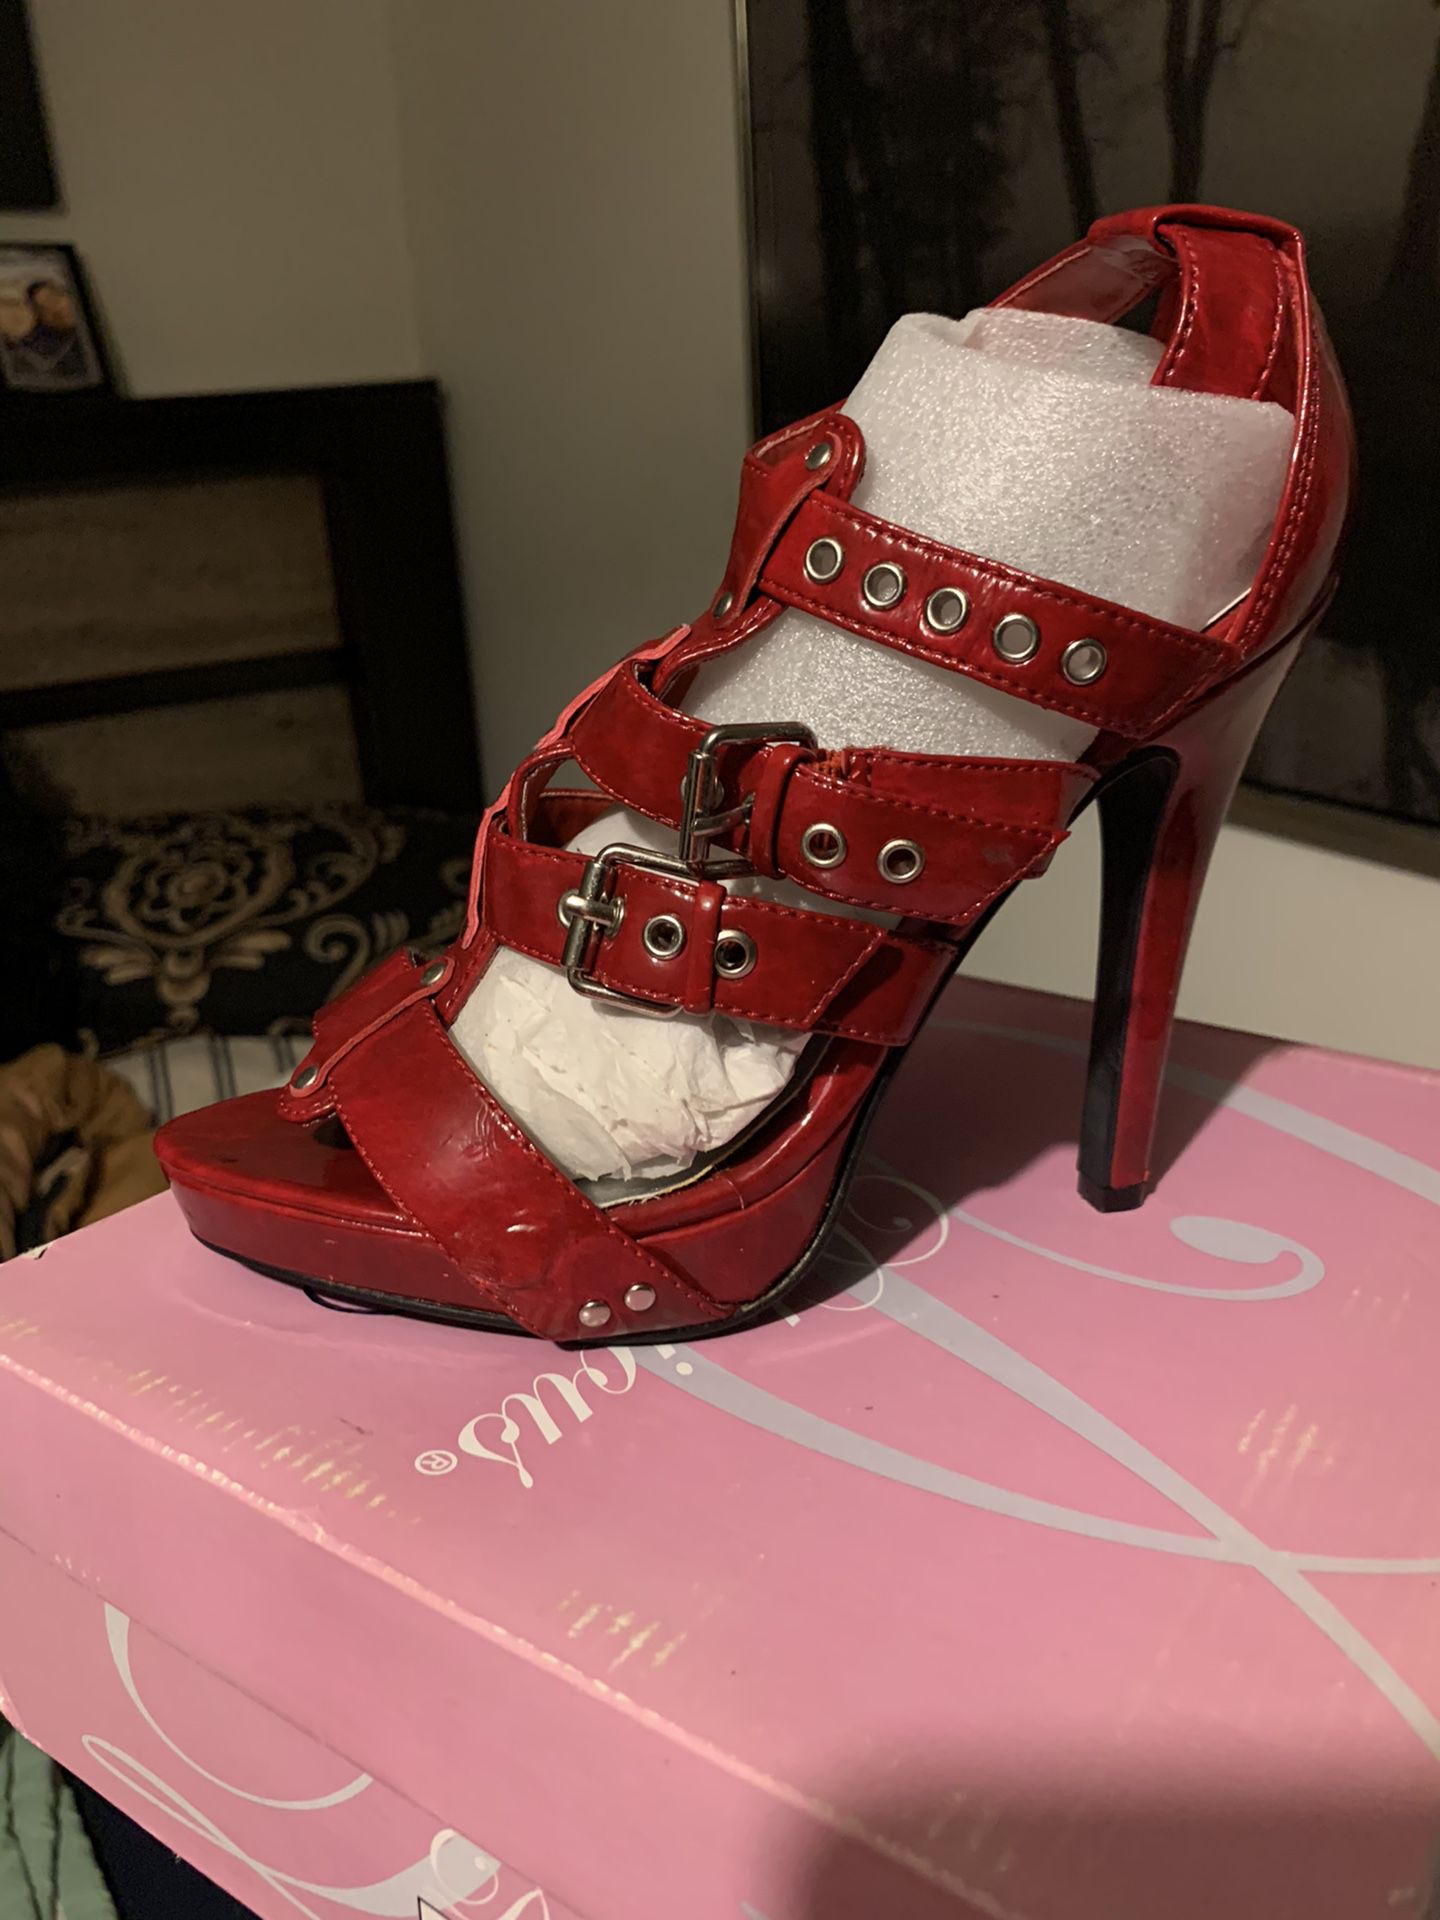 Red high heels